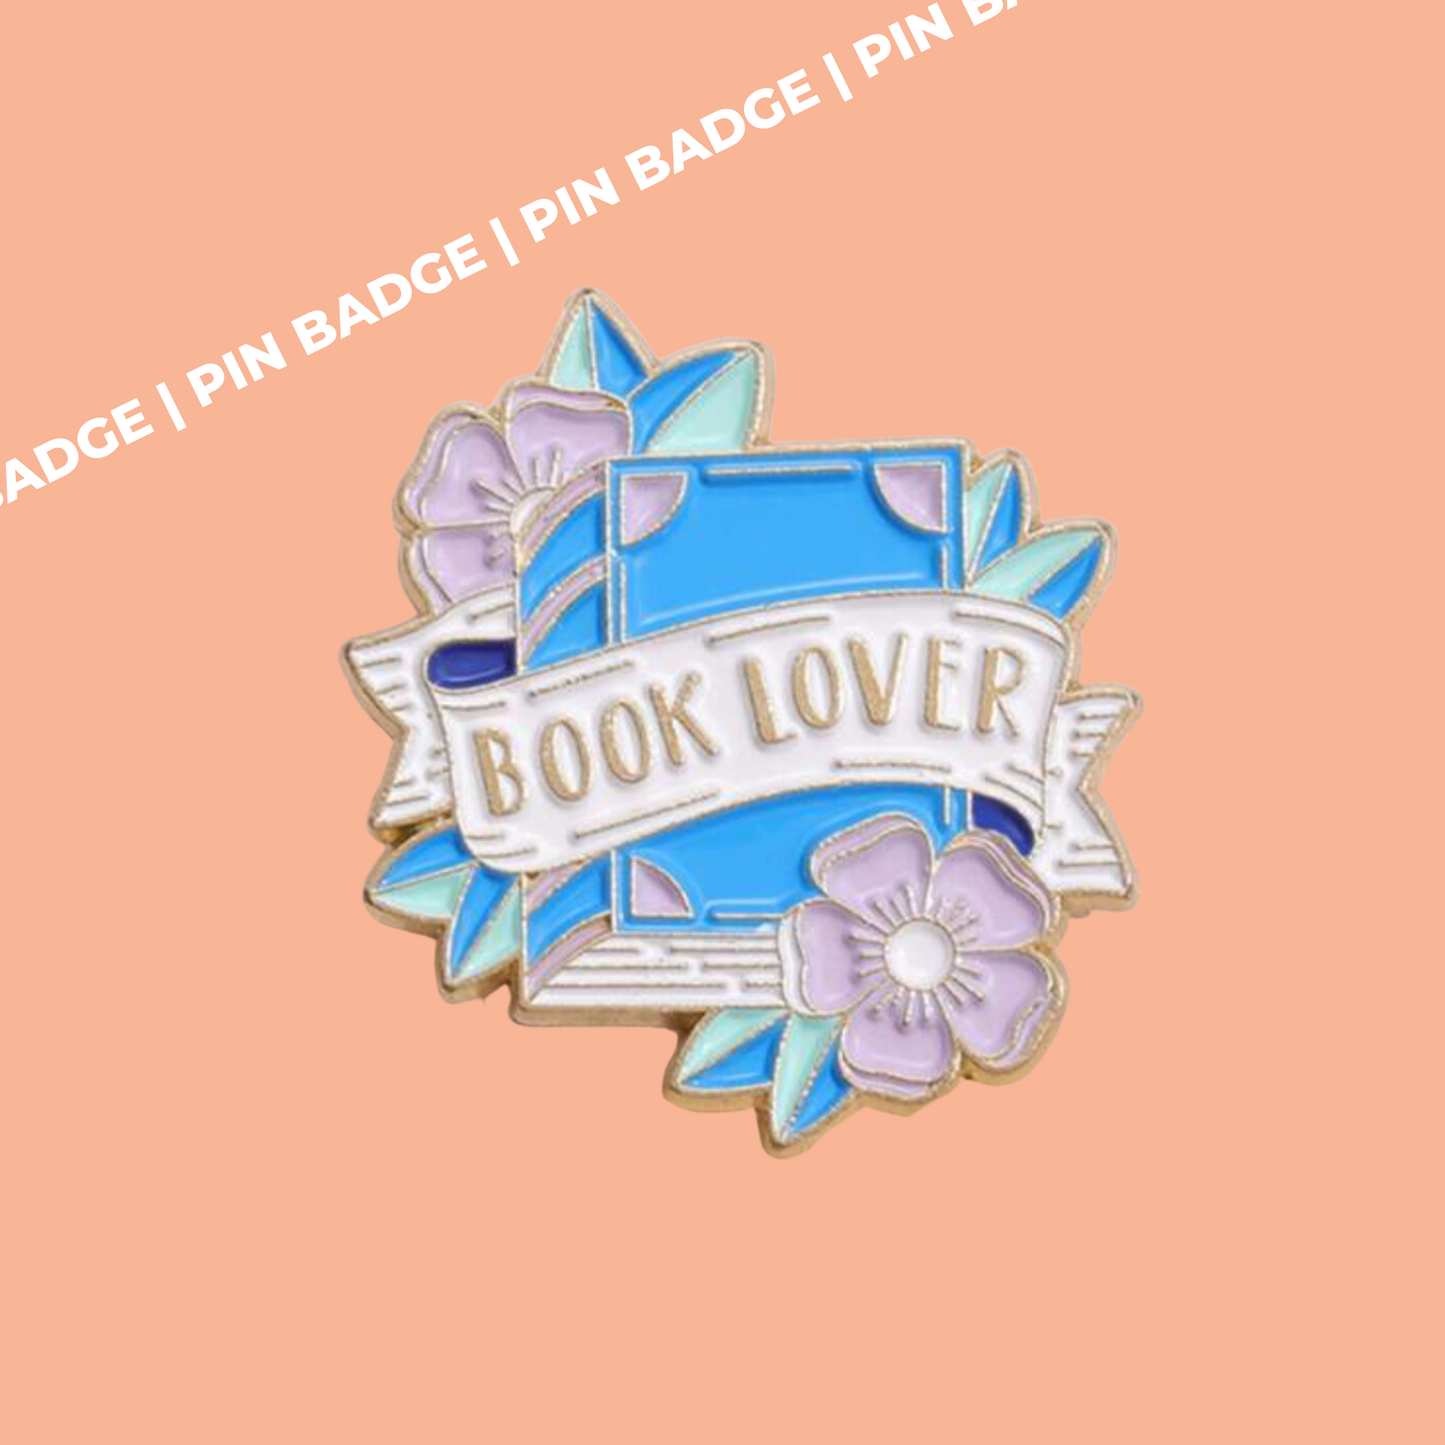 Book Lover Pin Badge